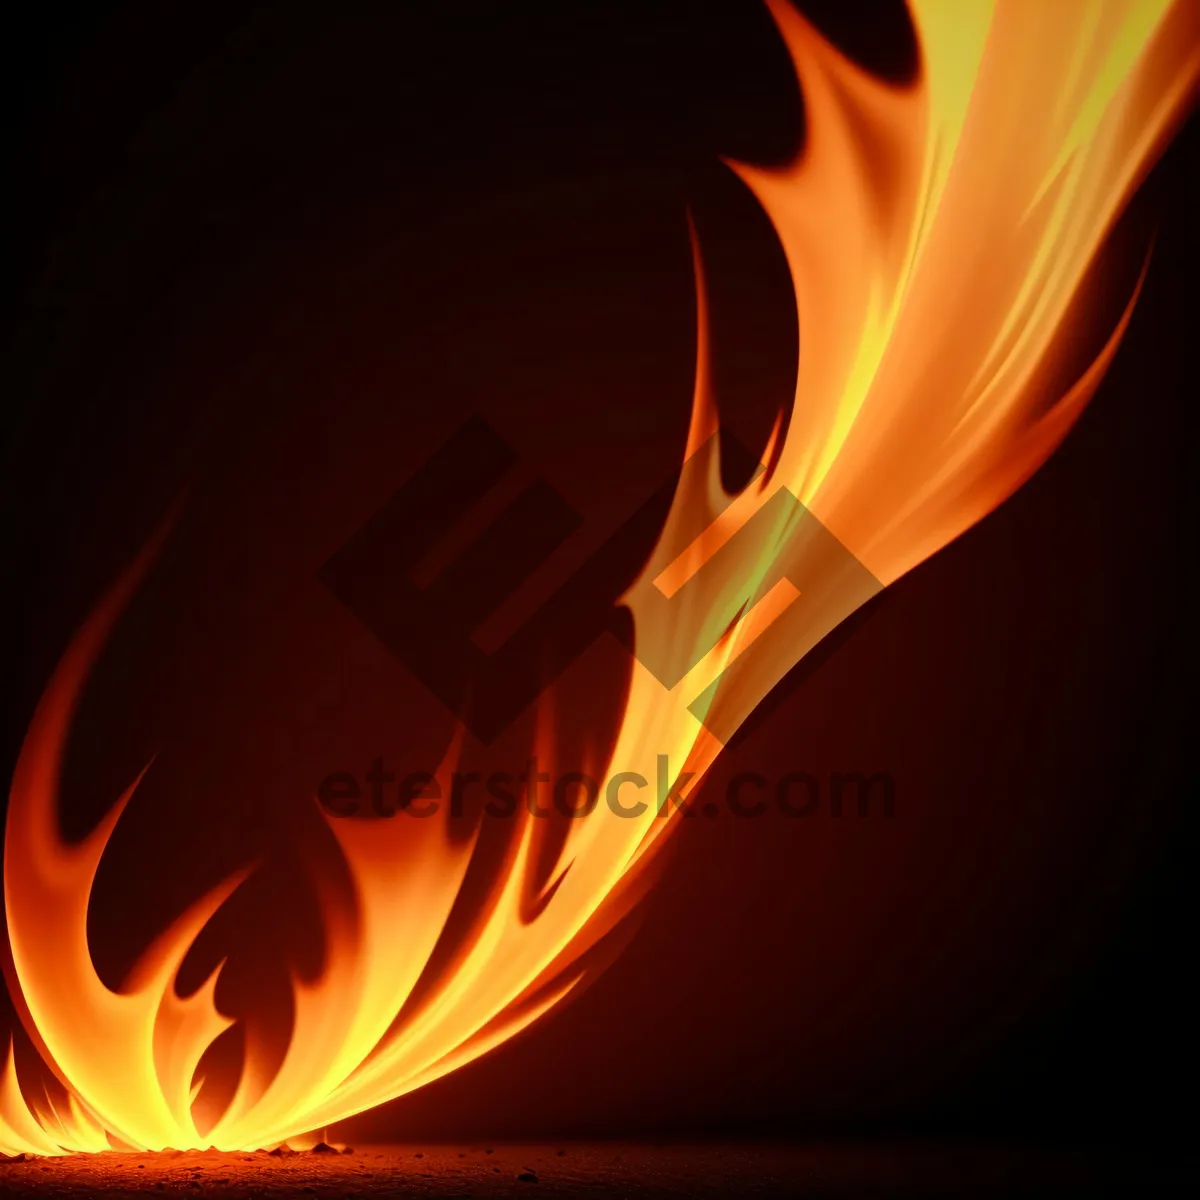 Picture of Blazing Fire: A Fiery Swirl of Energy